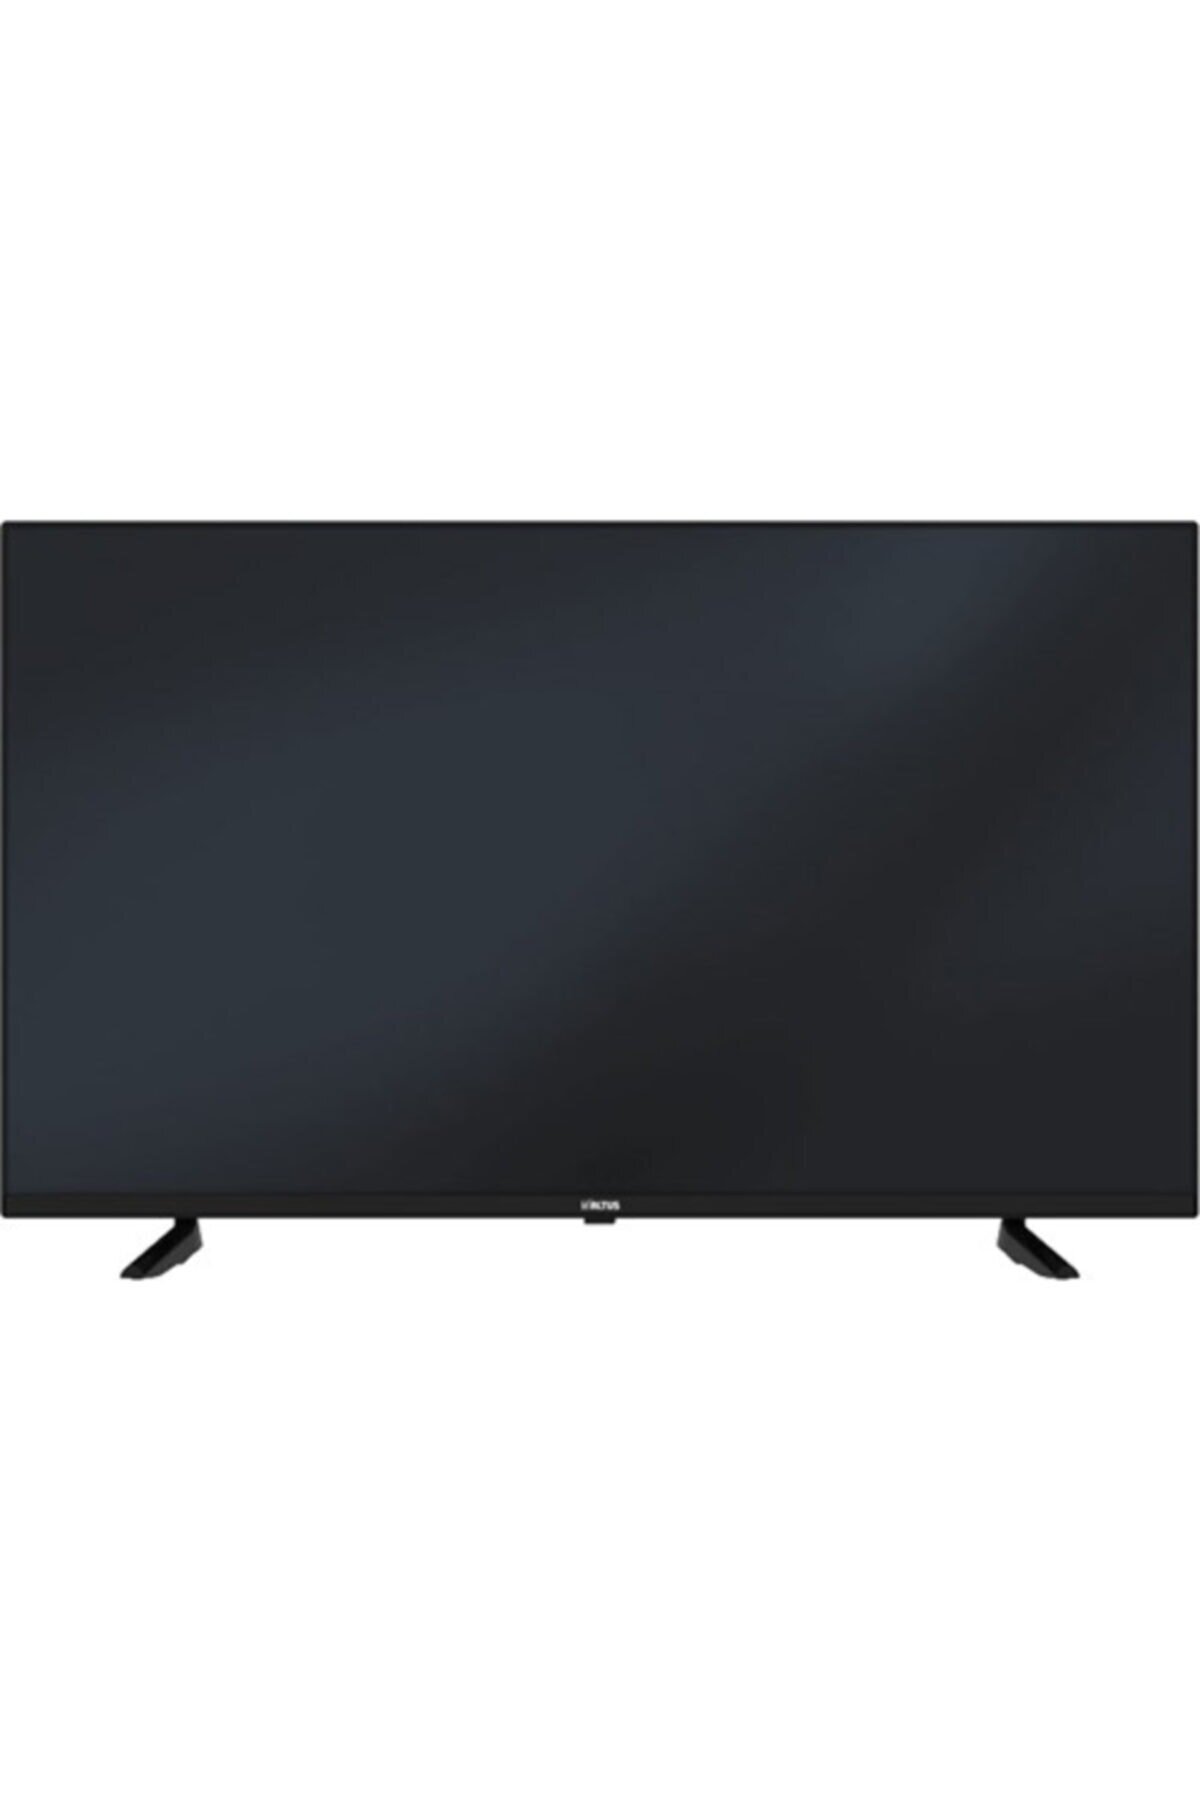 Altus AL50 B 850 5B 50" 4K Ultra HD Smart LED TV